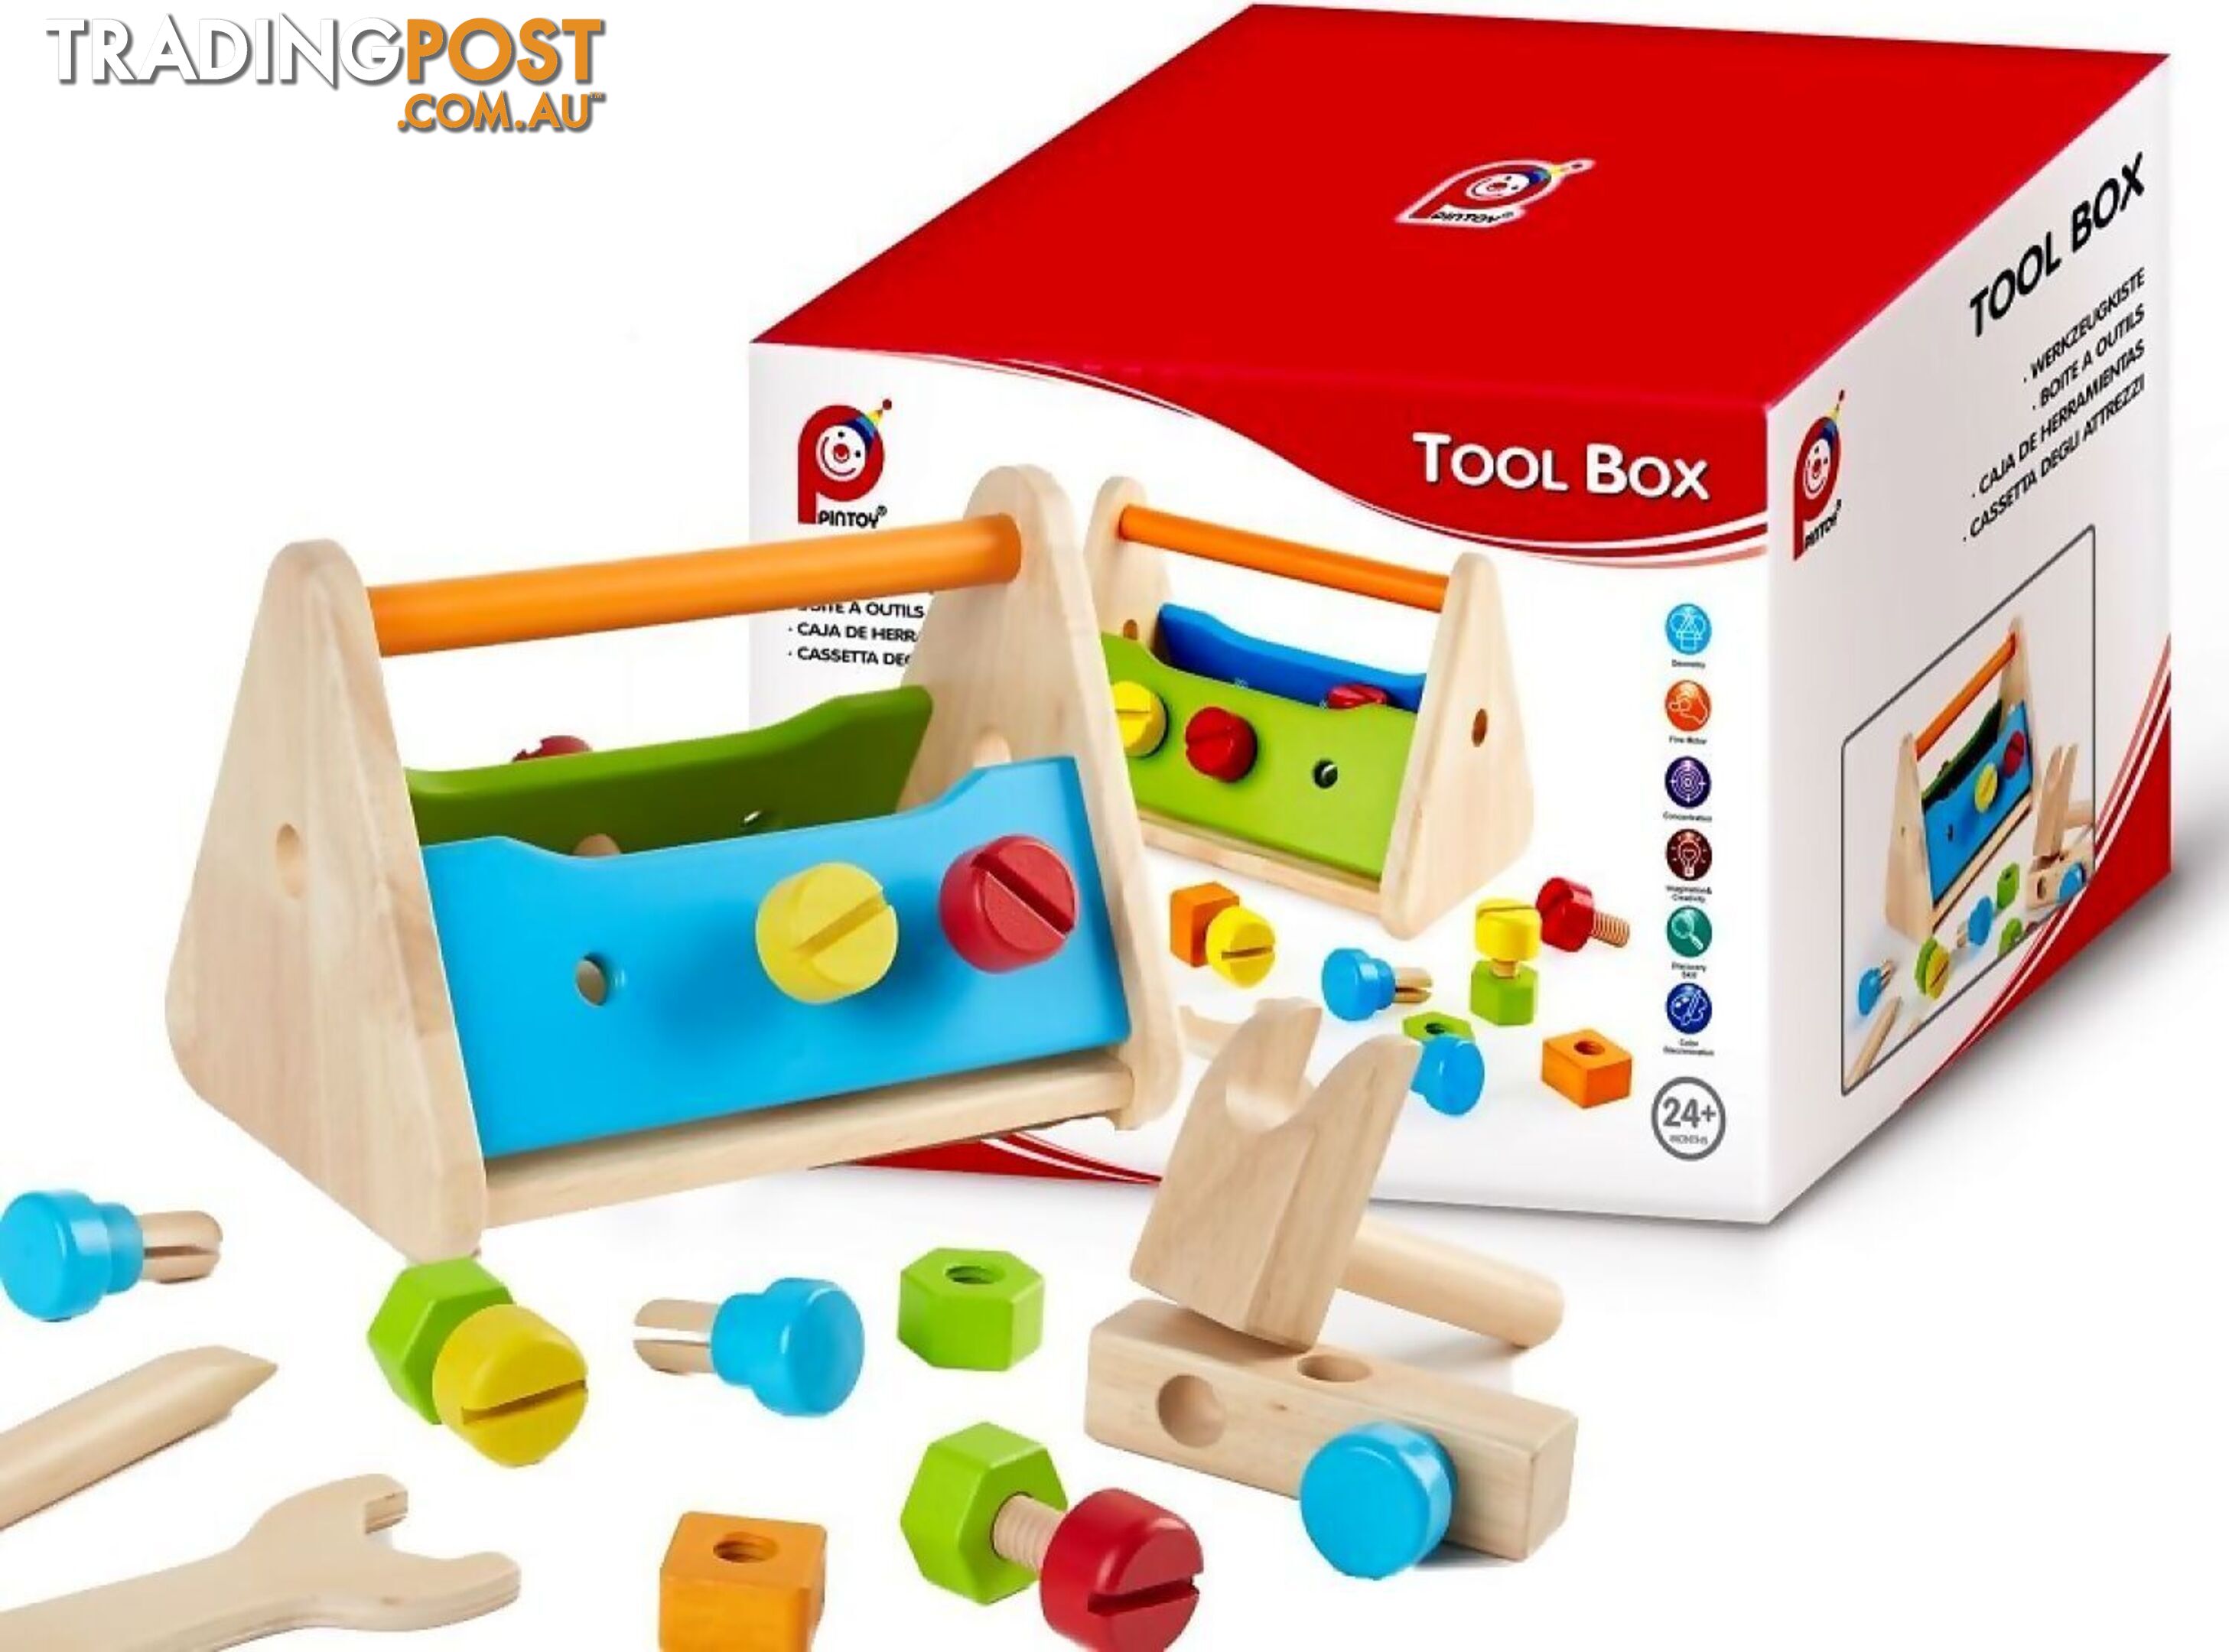 Tool Box - Pintoy Wooden Toys - Jdpin028333 - 6943478028333